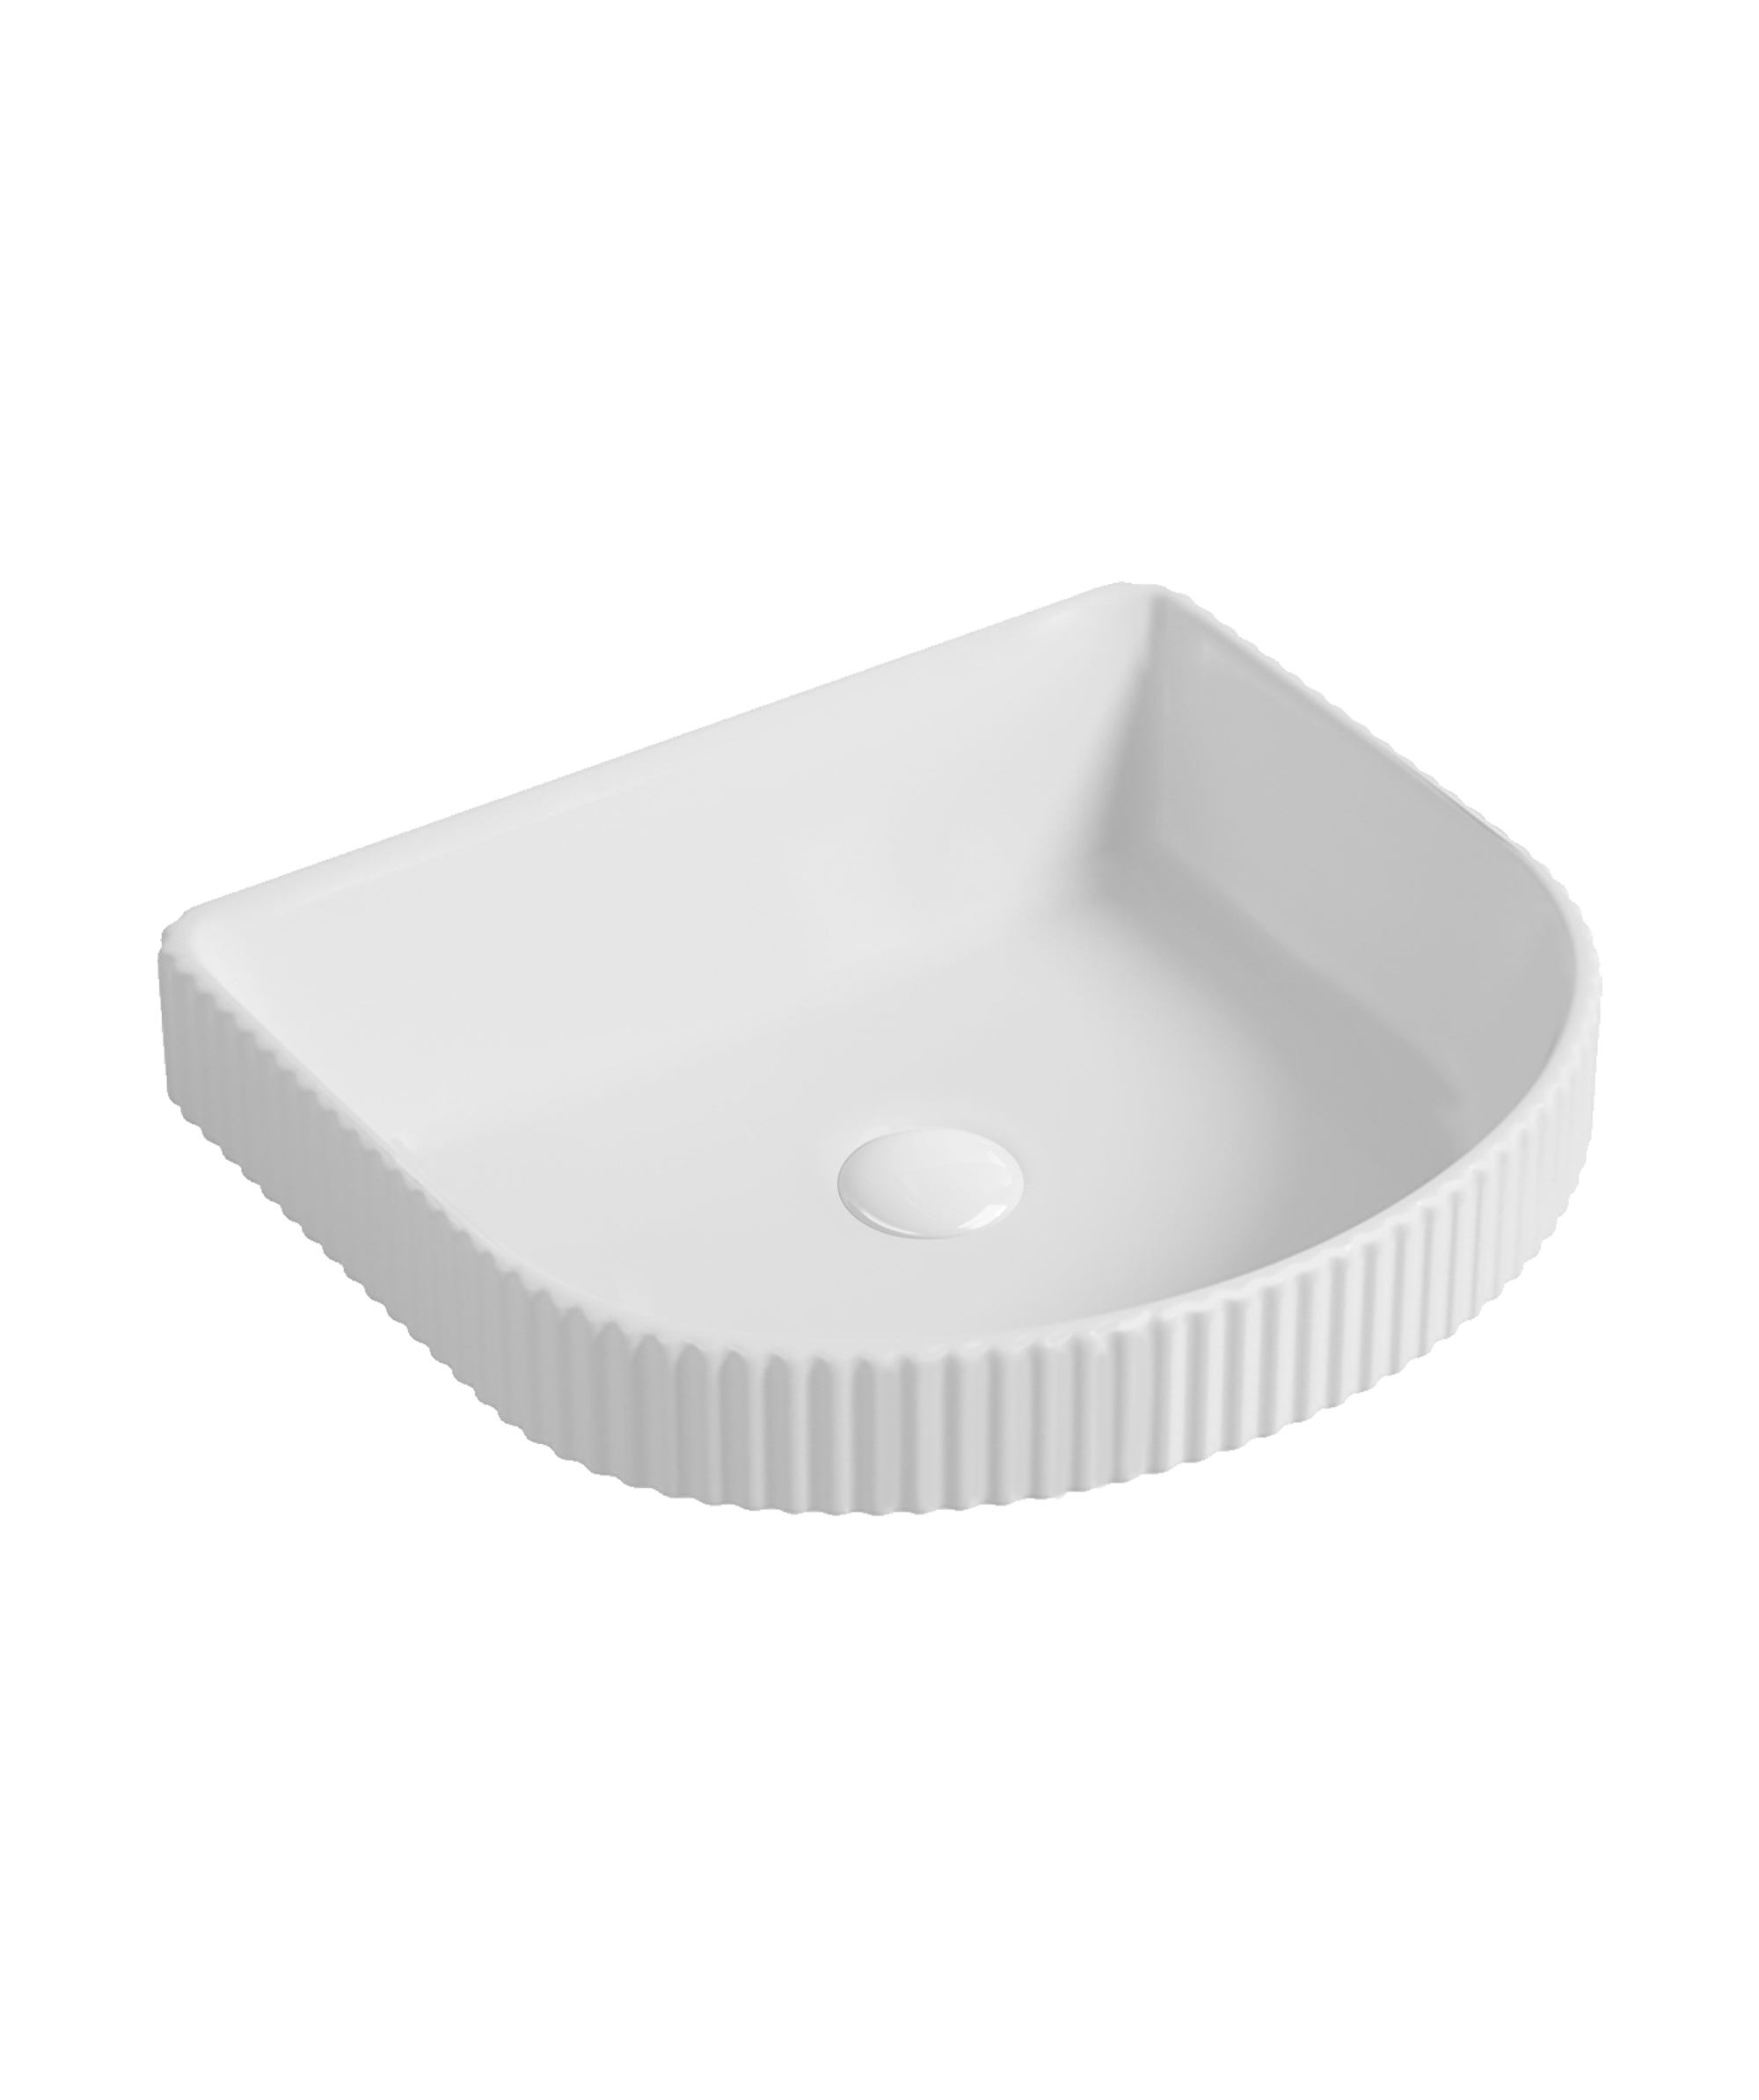 Cleo 430 ceramic basin - White Gloss